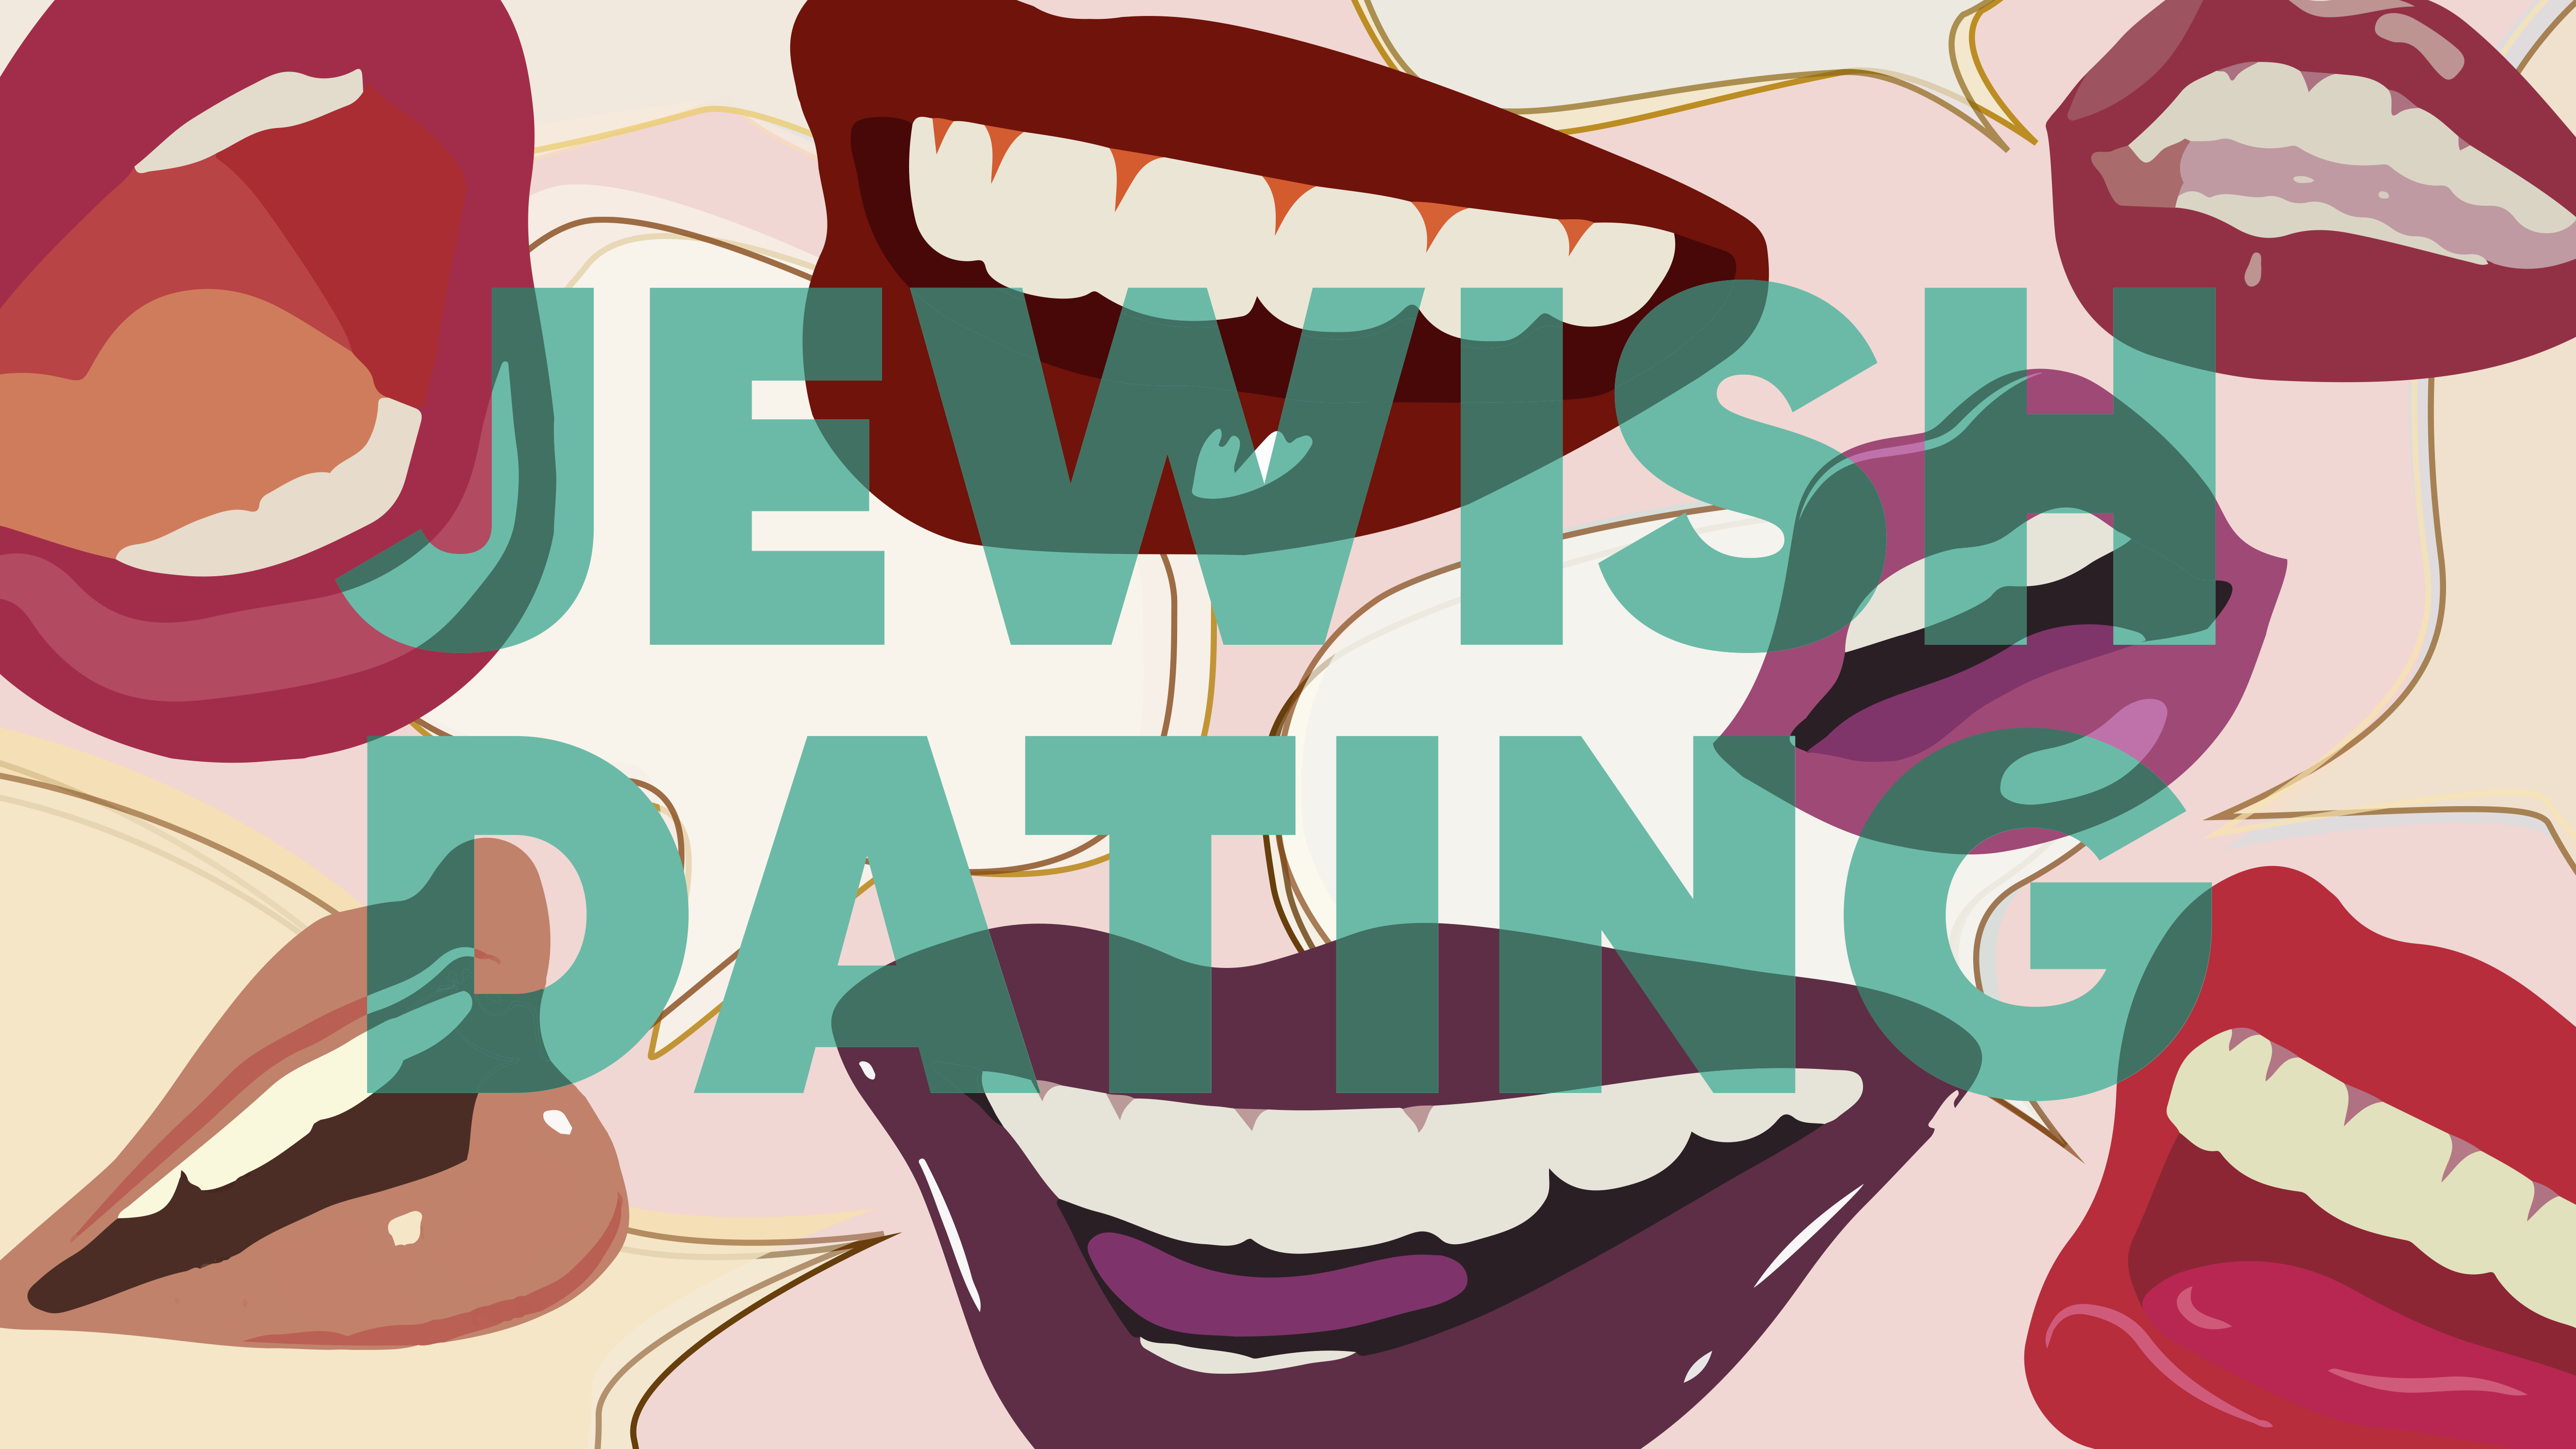 Jewish Dating